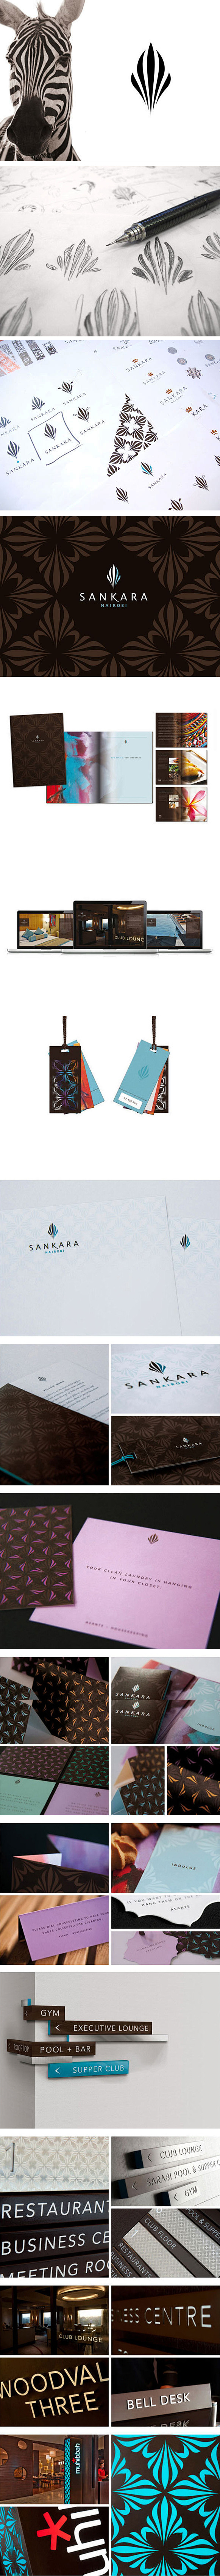 Sankara 酒店形象设计